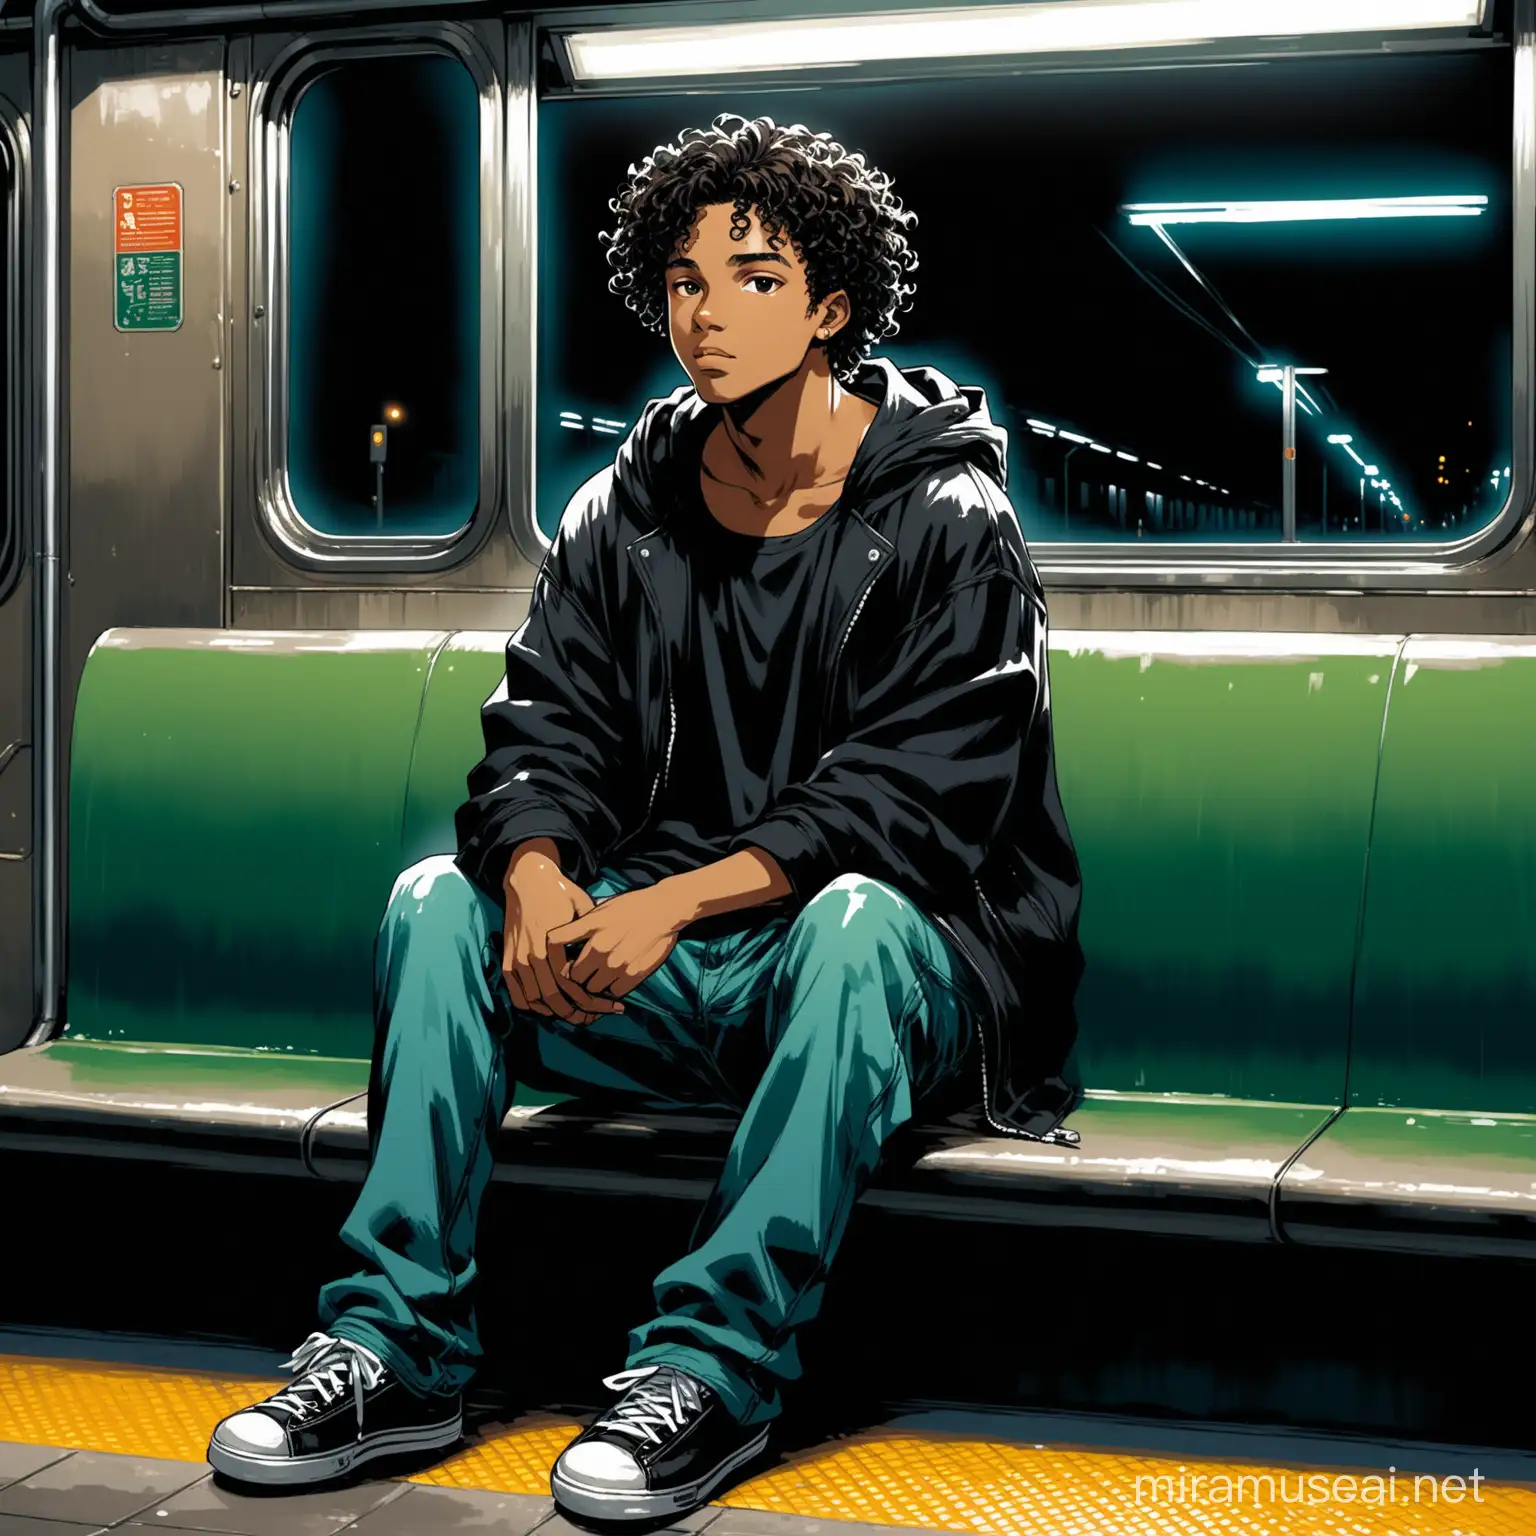 Urban Youth Solitude in GraffitiAdorned Subway